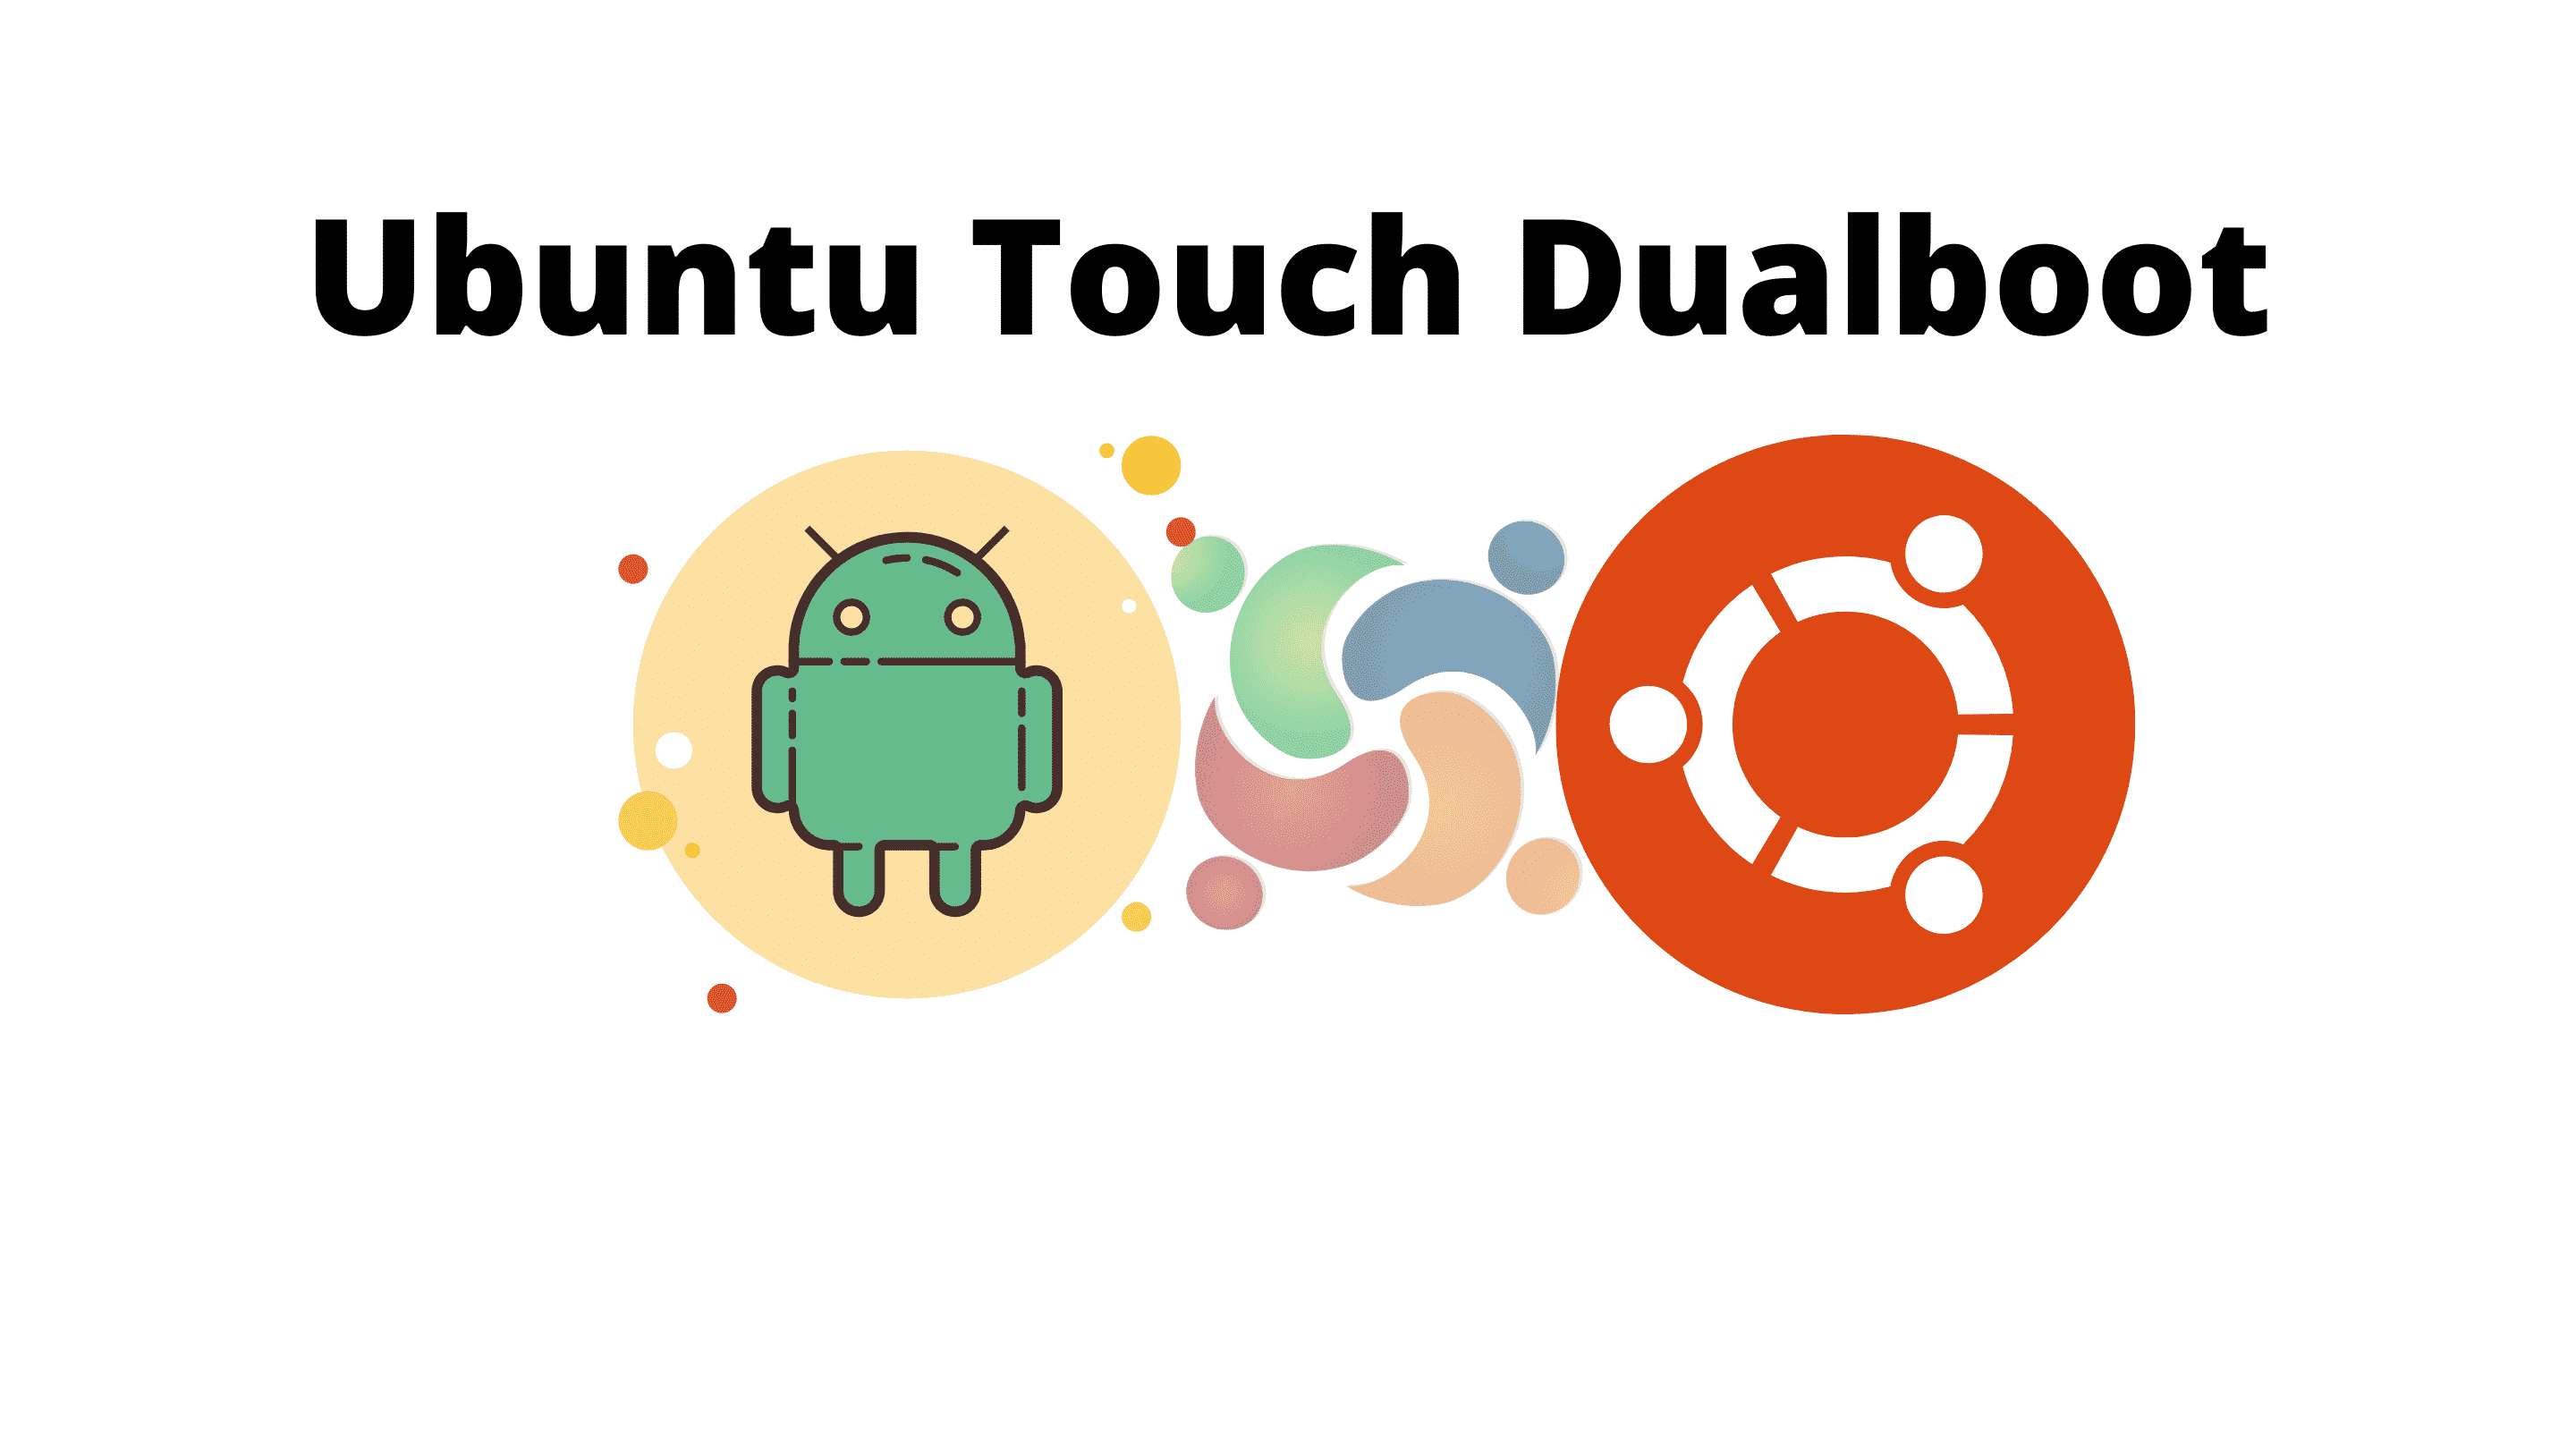 conheca-o-ubuntu-dual-boot-touch-android-e-ubuntu-no-mesmo-smartphone